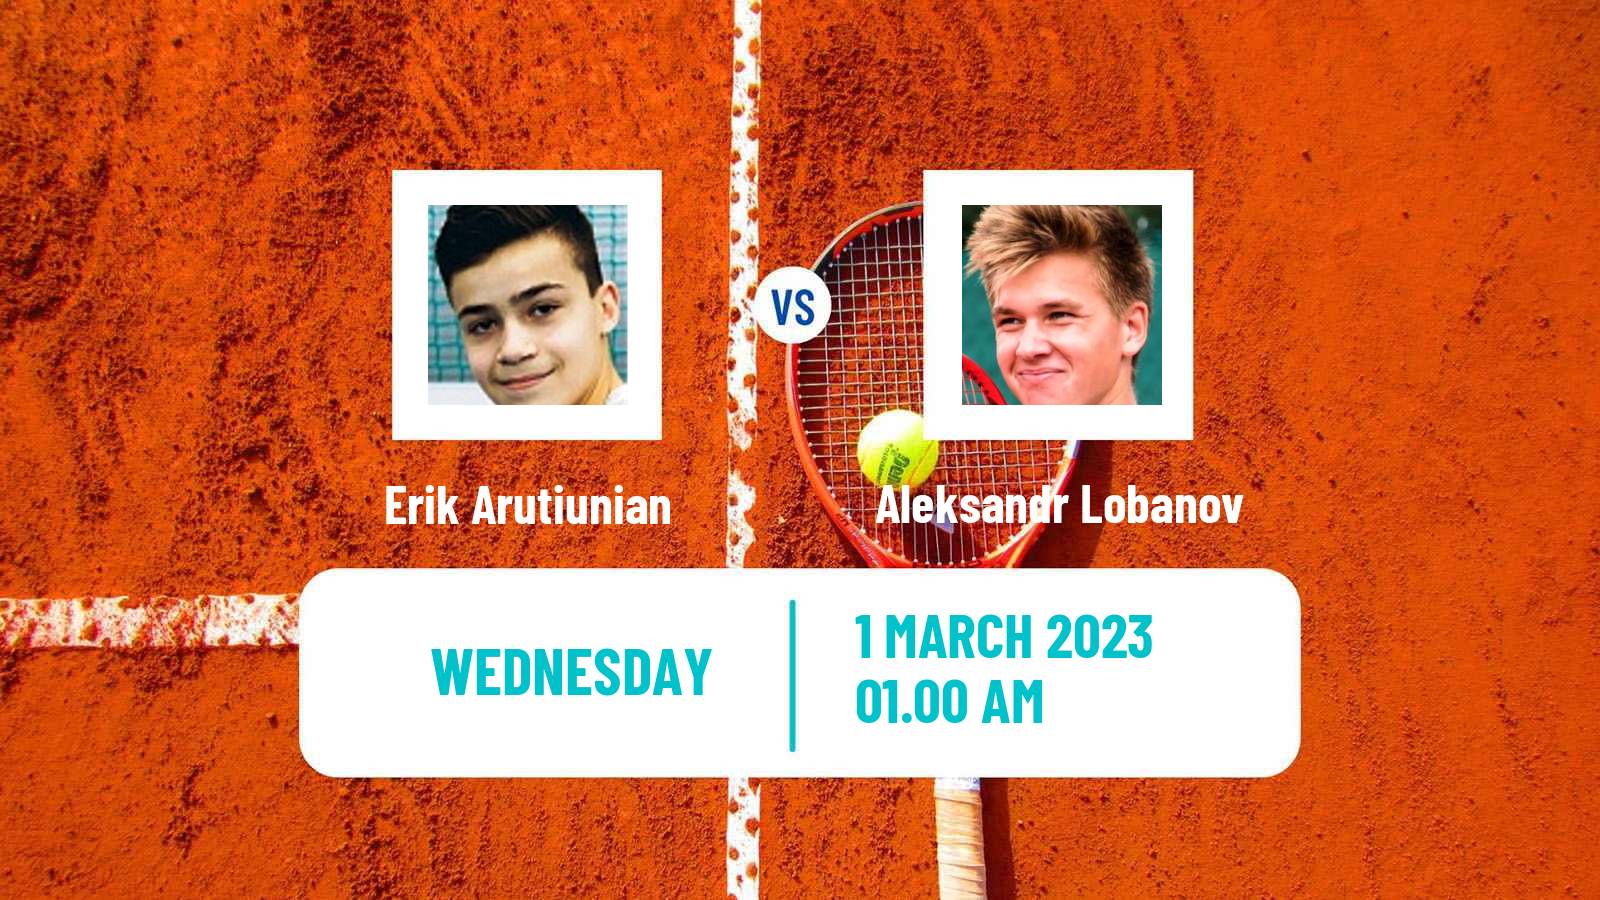 Tennis ITF Tournaments Erik Arutiunian - Aleksandr Lobanov